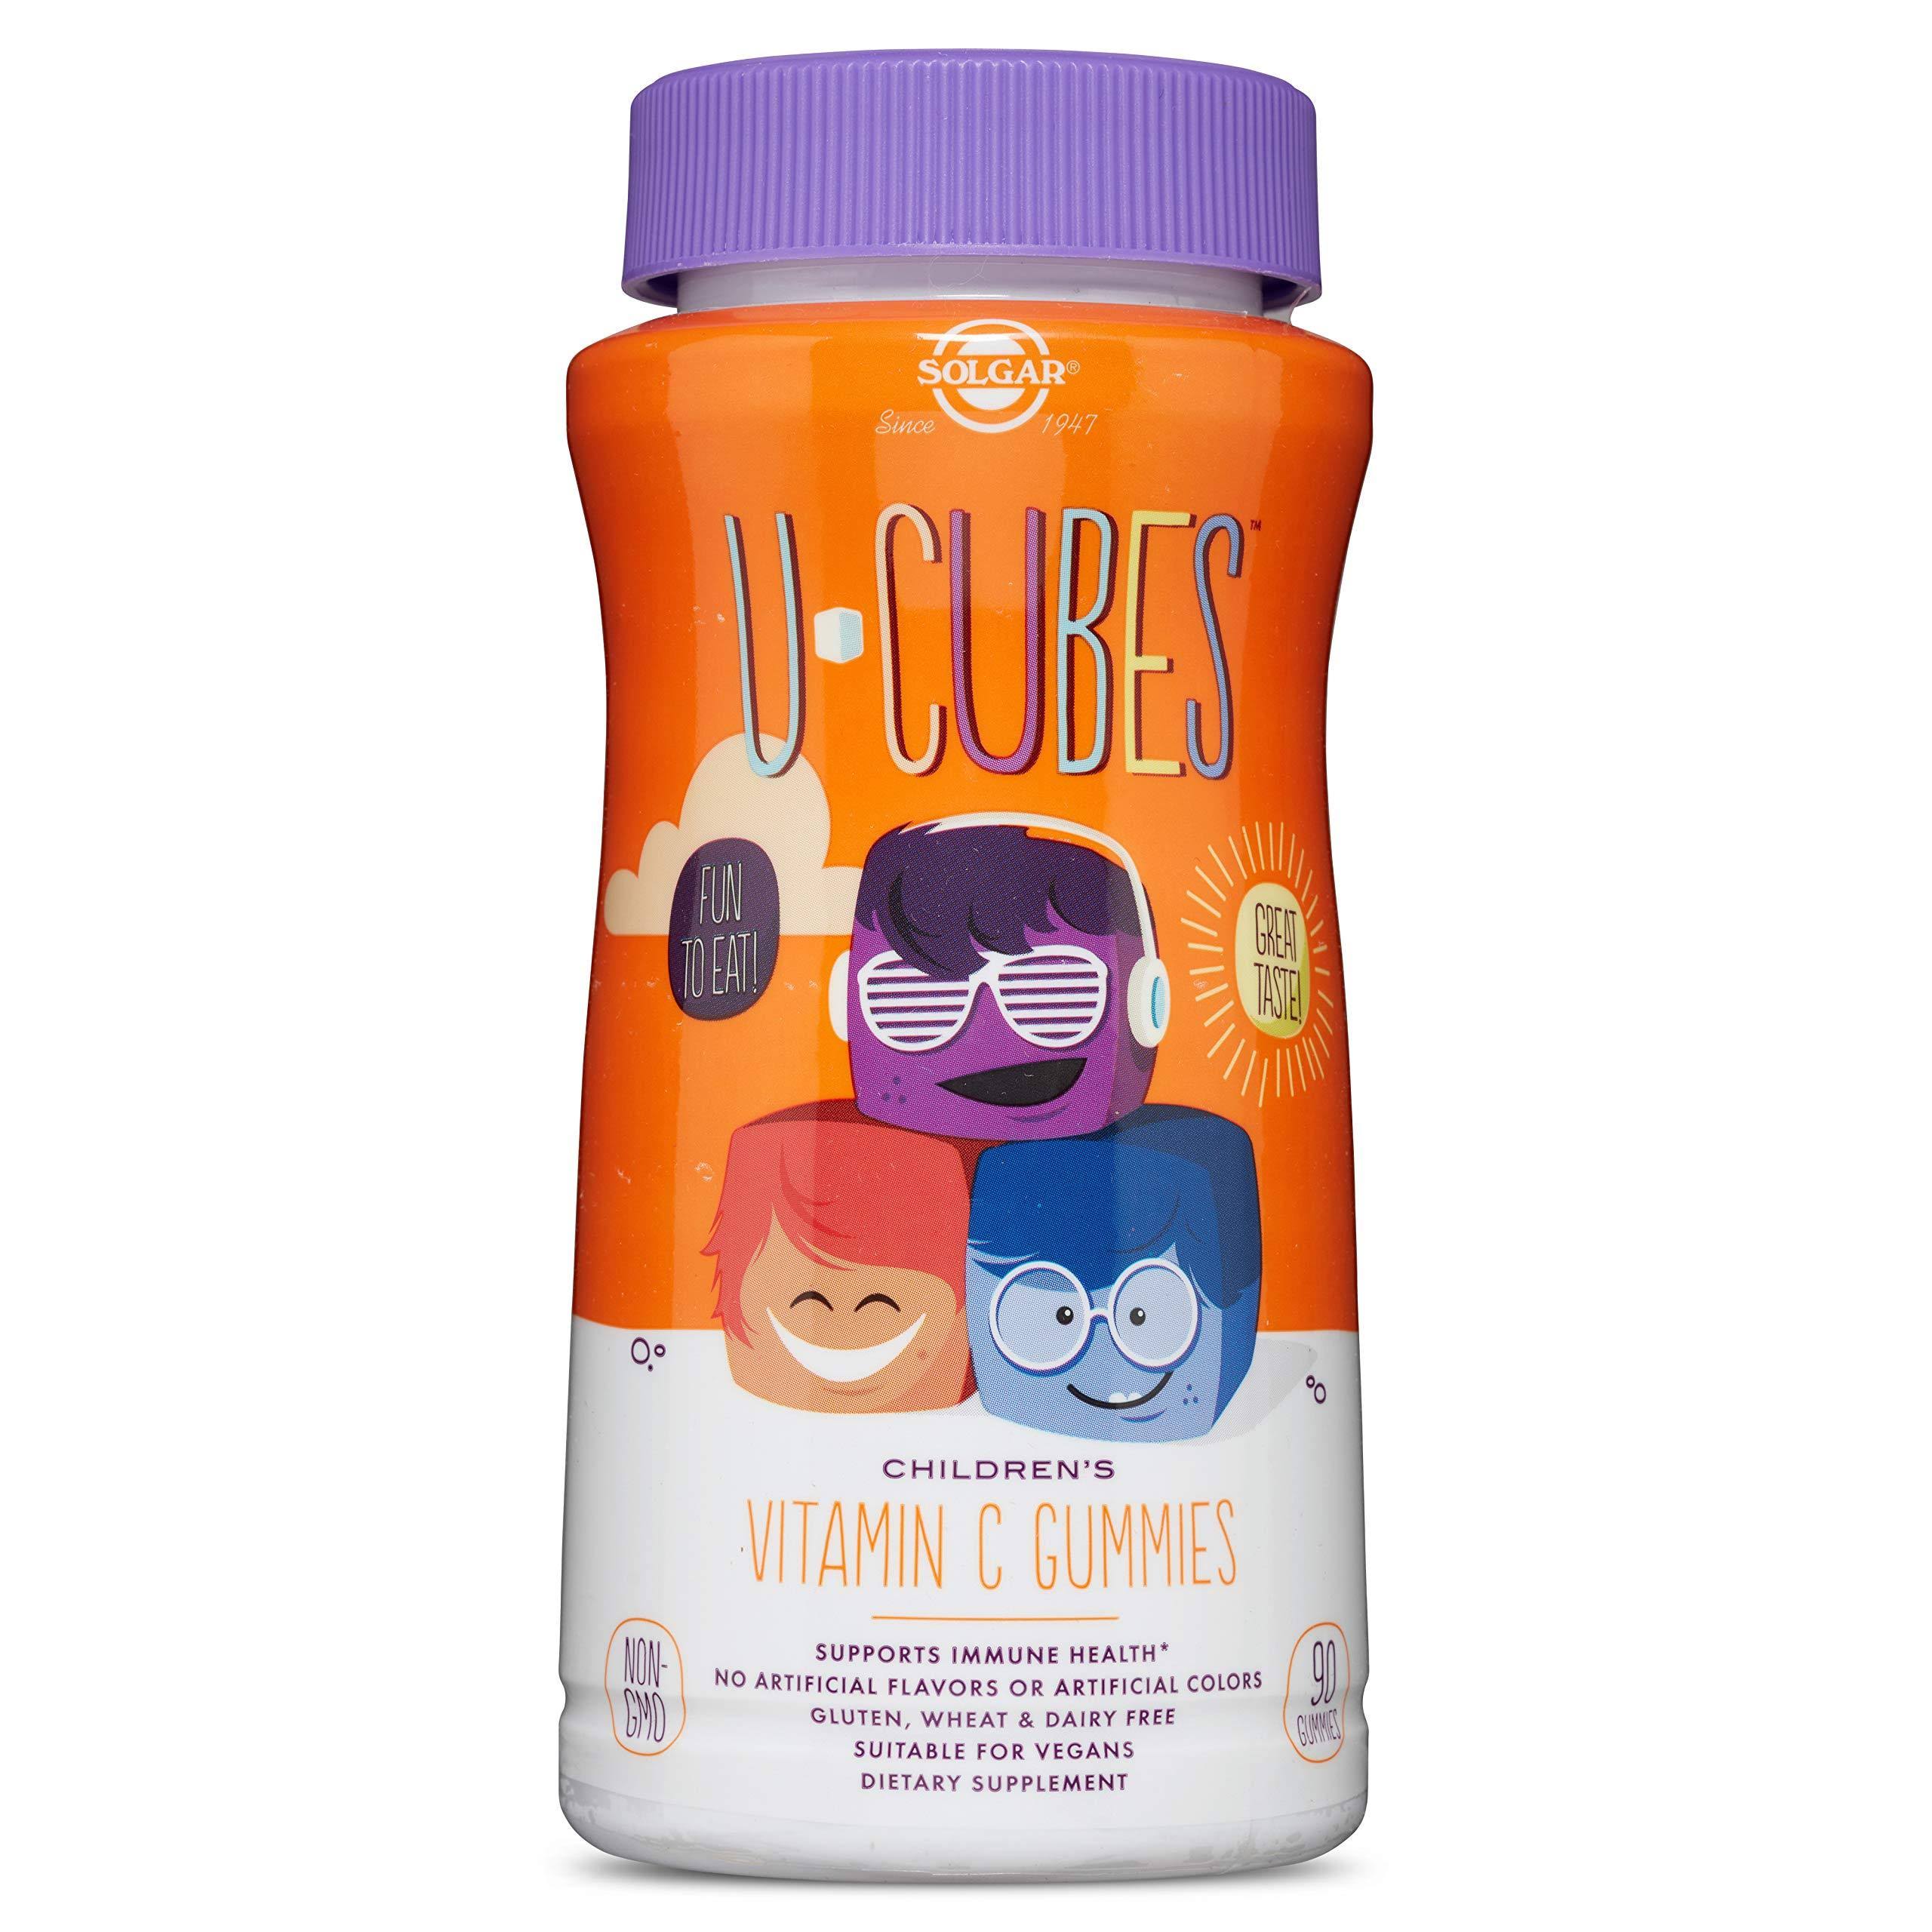 Solgar, U Cubes Children's Vitamin C Gummies - 90 Pack